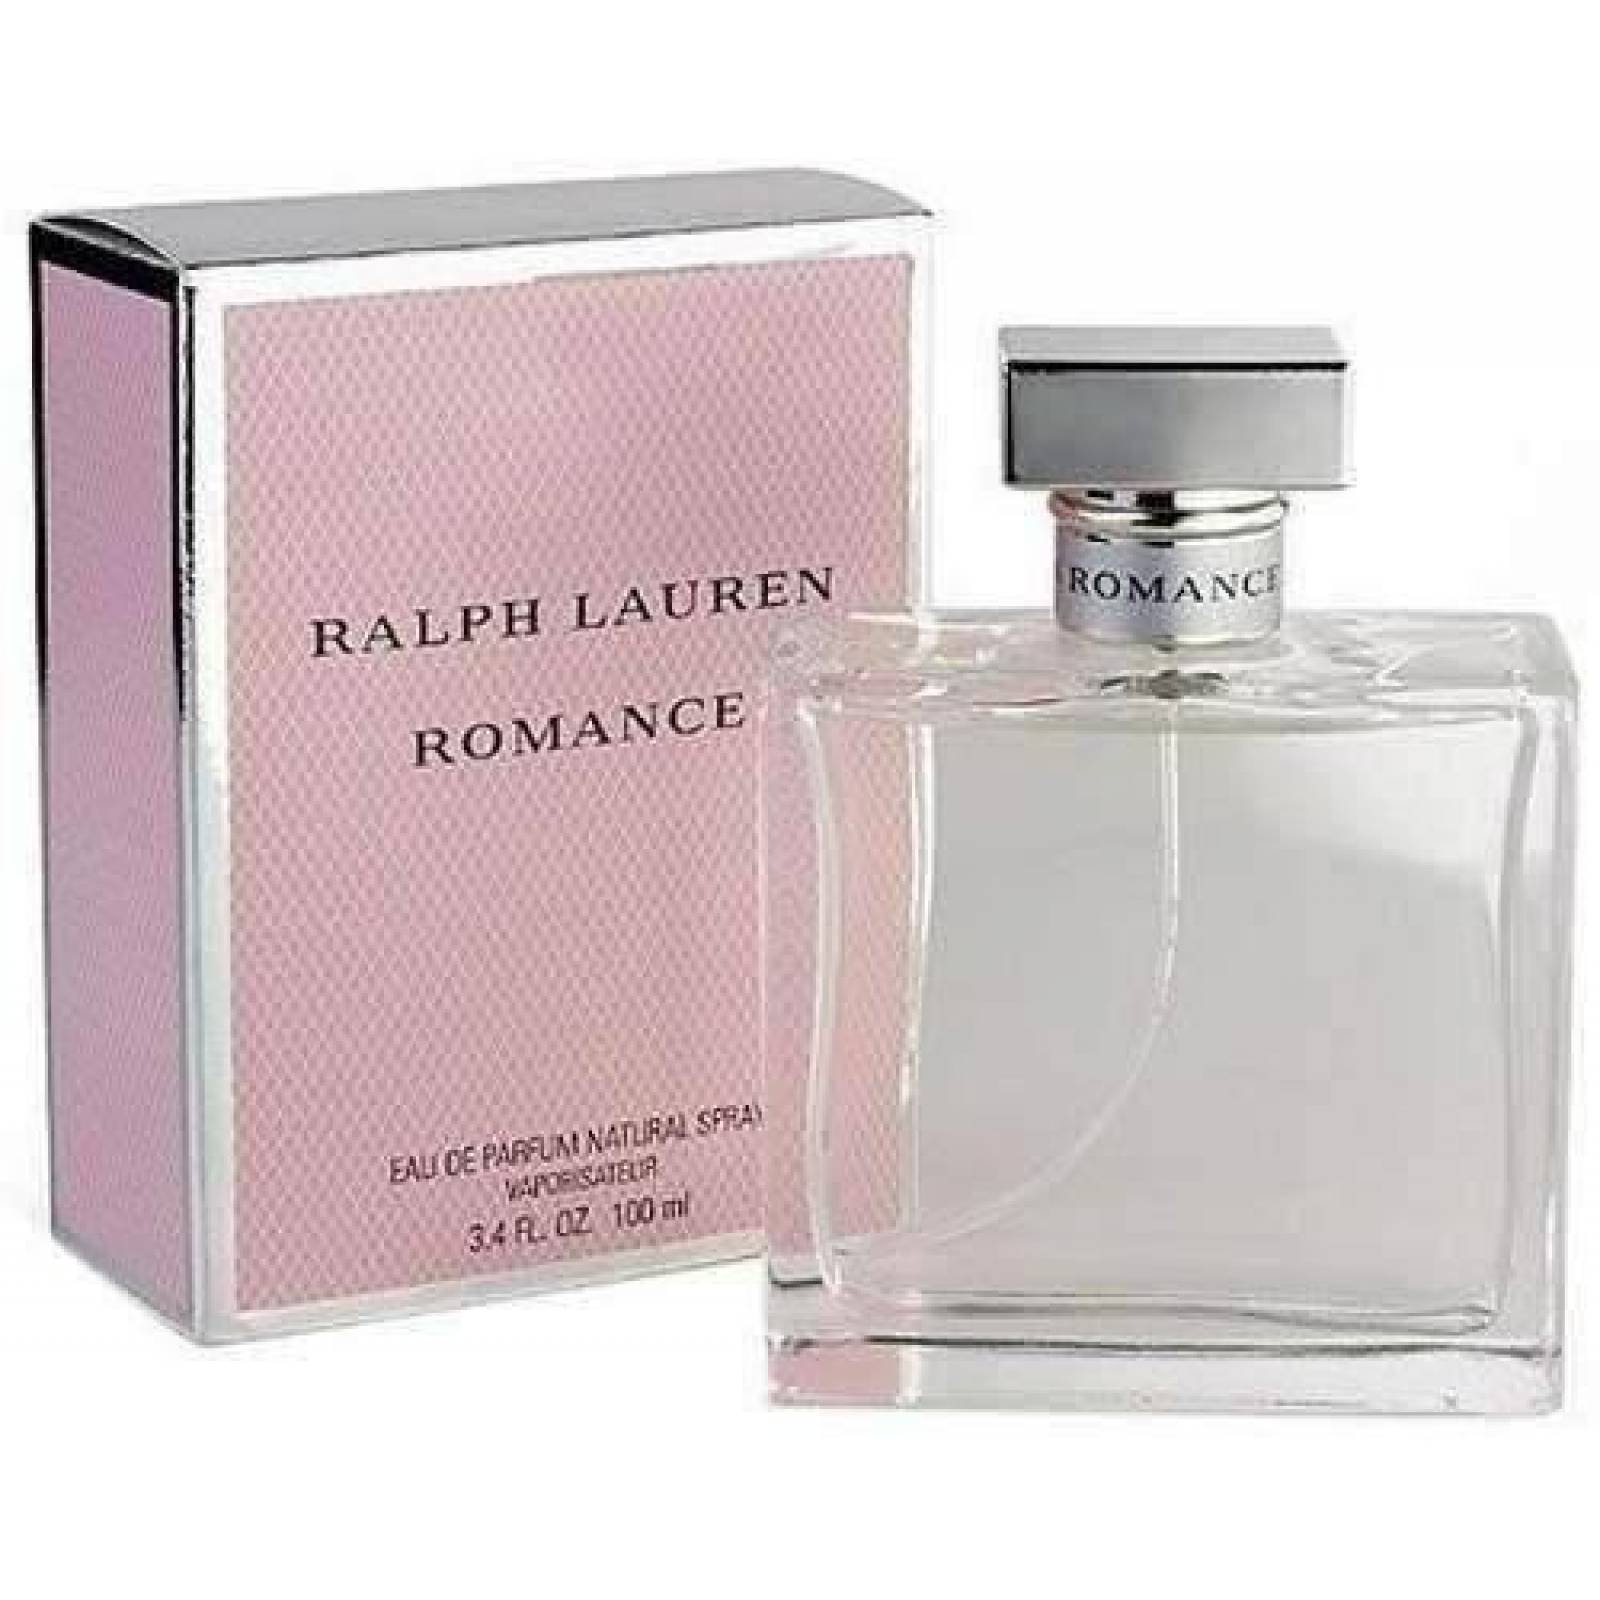 Romance Dama 100 Ml Ralph Lauren Edp Spray - Original